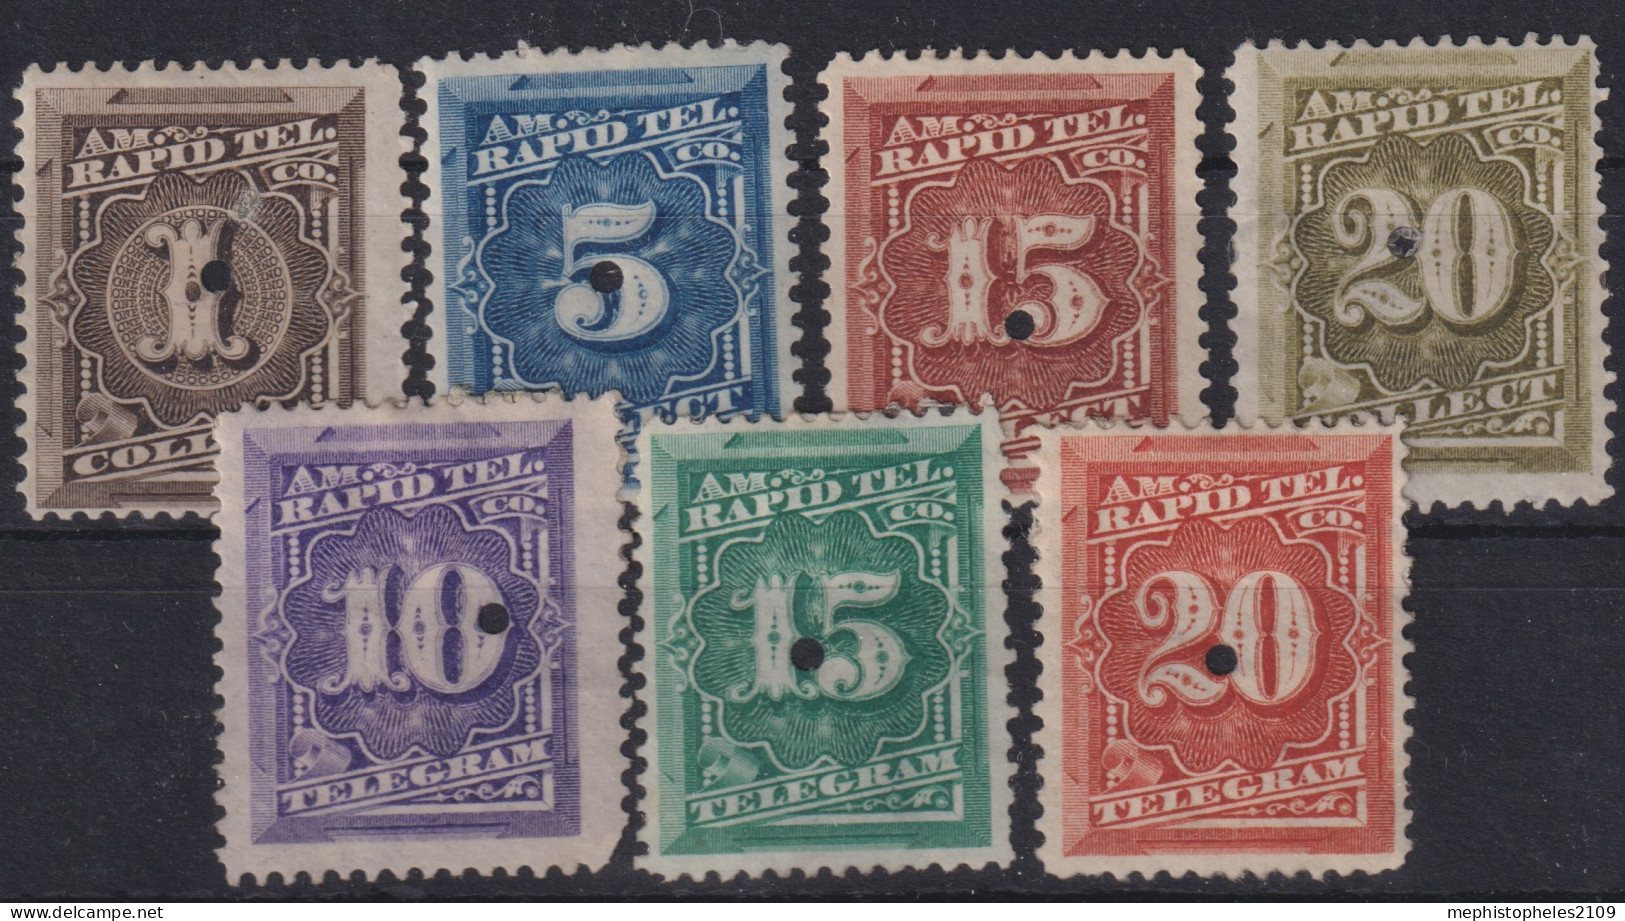 USA 1881 - Canceled - RAPID TELEGRAPH - 7 Stamps - Telegrafo